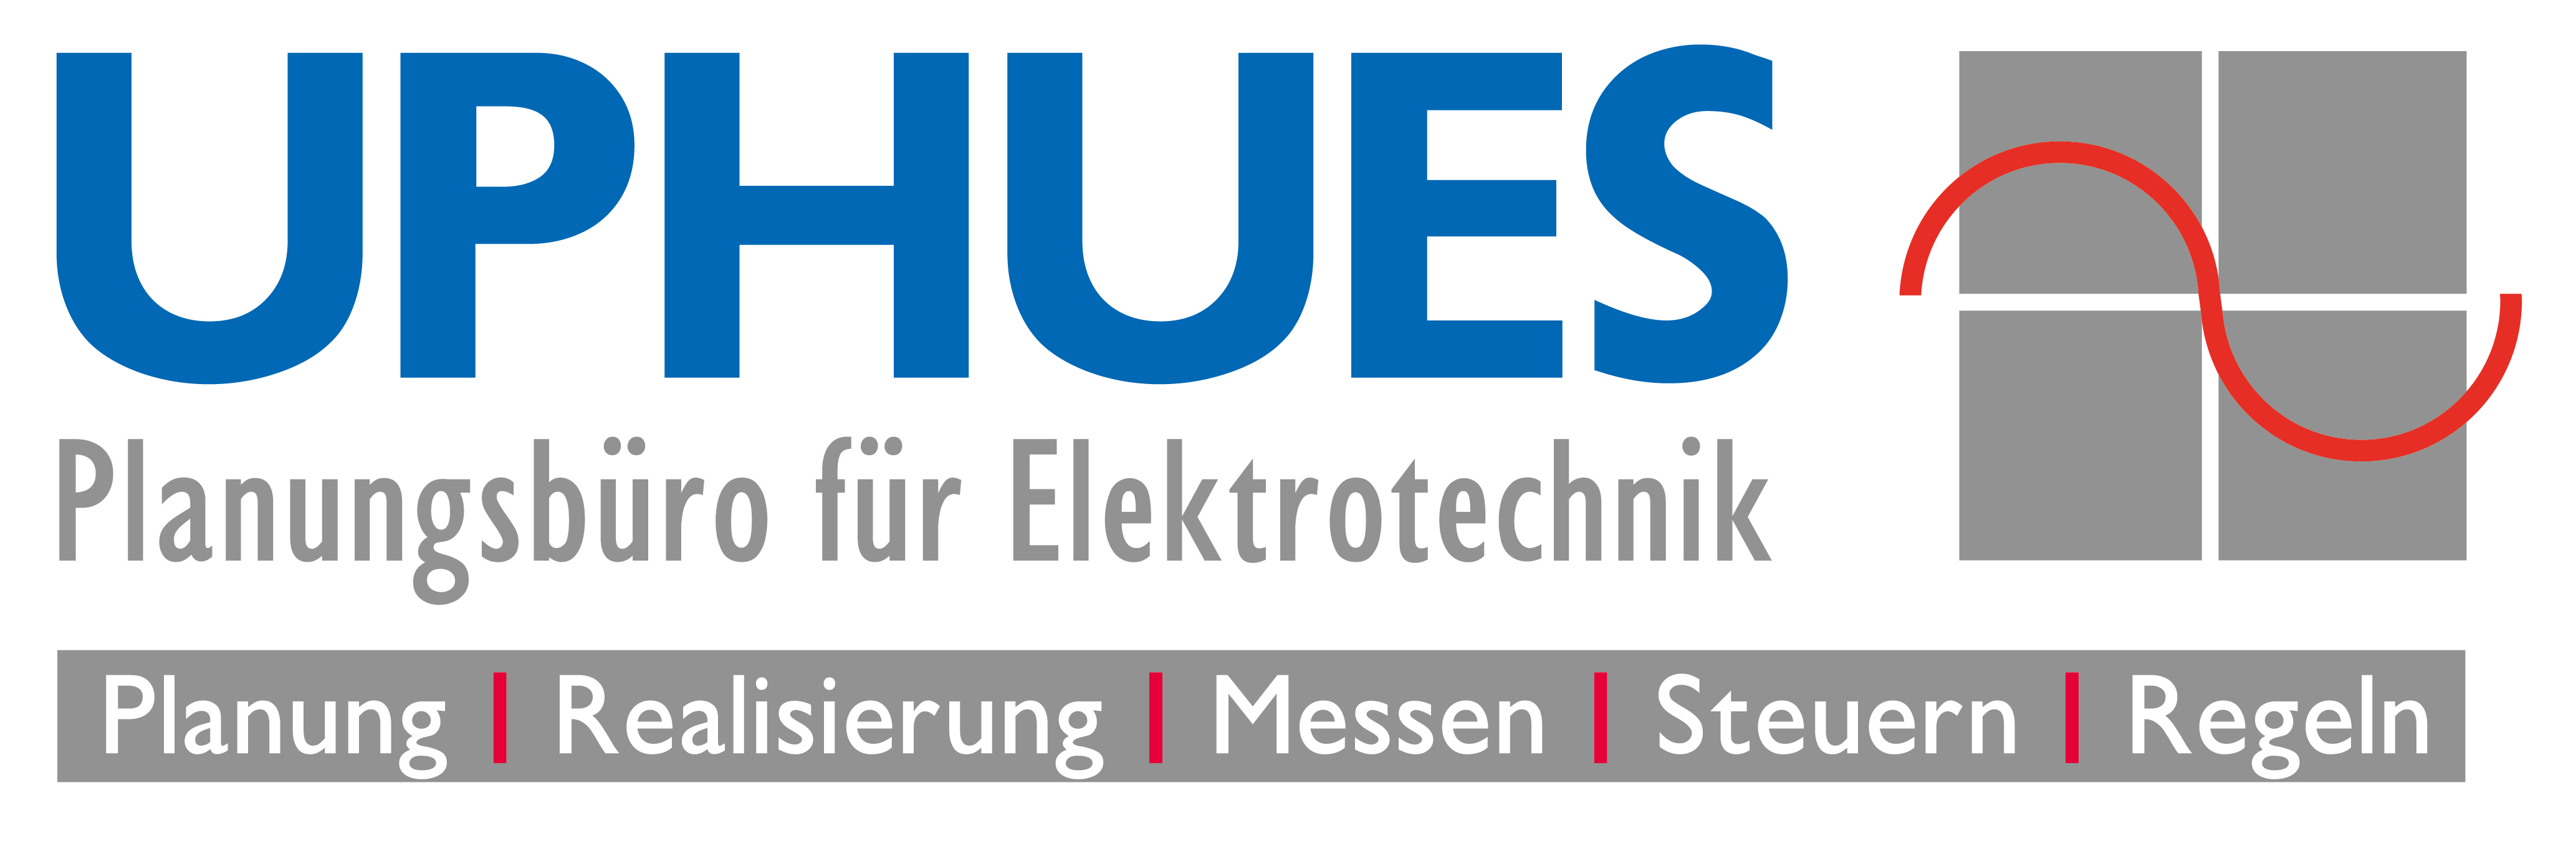 Planungsbüro Uphues_logo